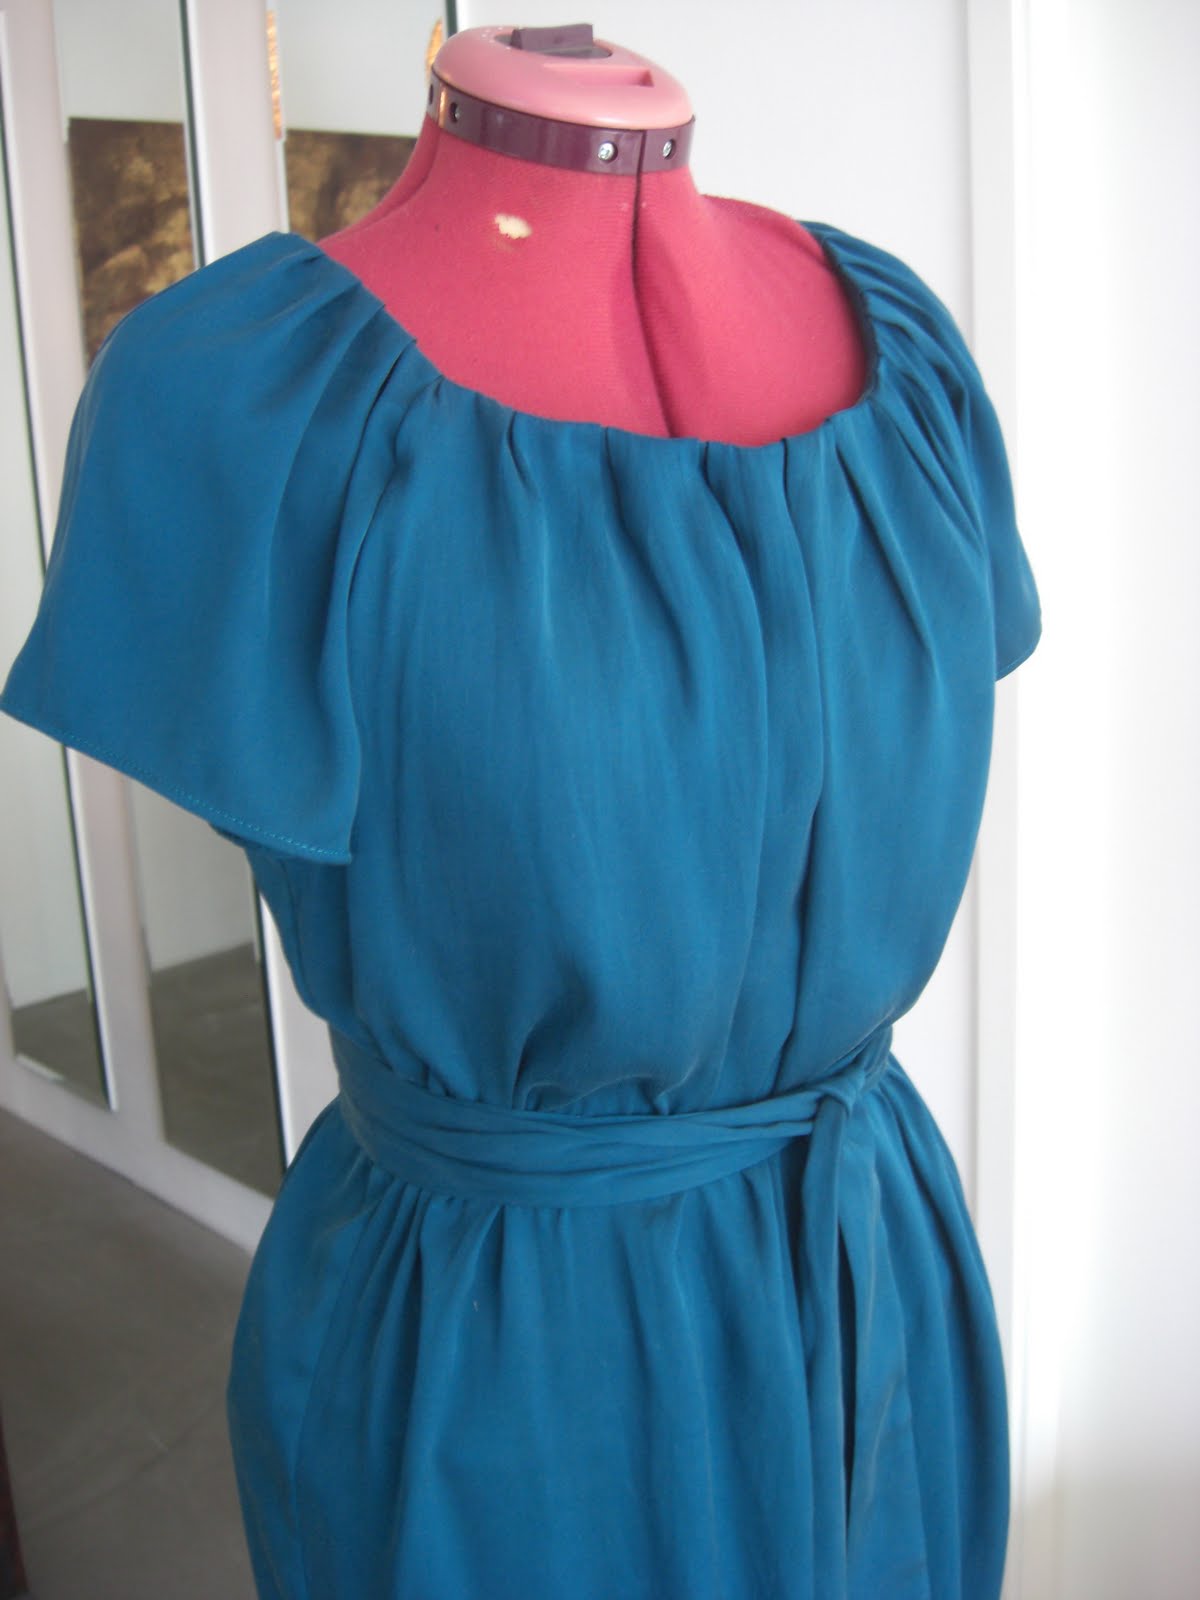 Allison.C Sewing Gallery: Vogue 1120 DKNY Dress, version 2